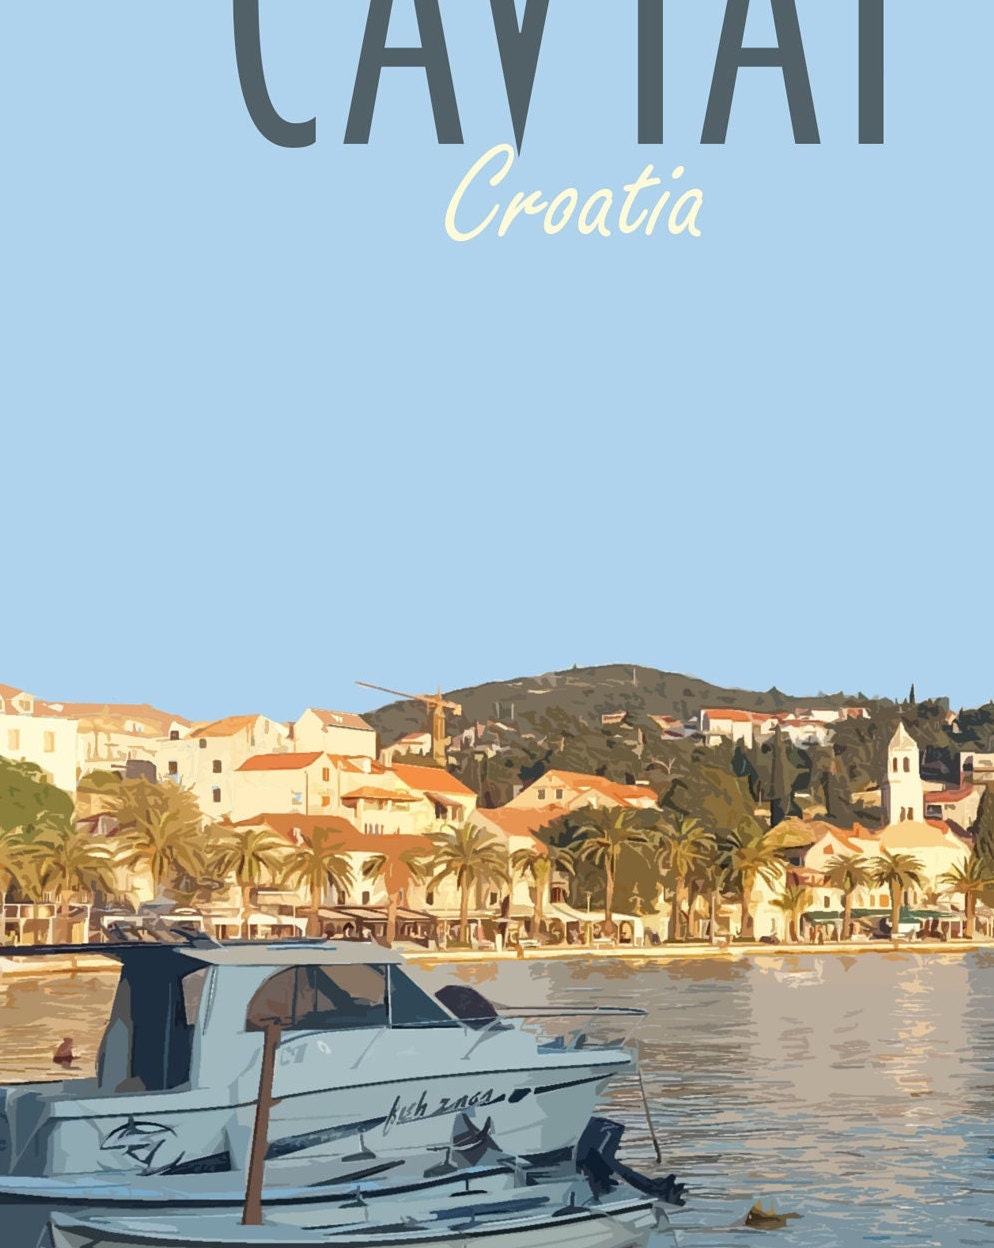 Cavtat Travel Poster